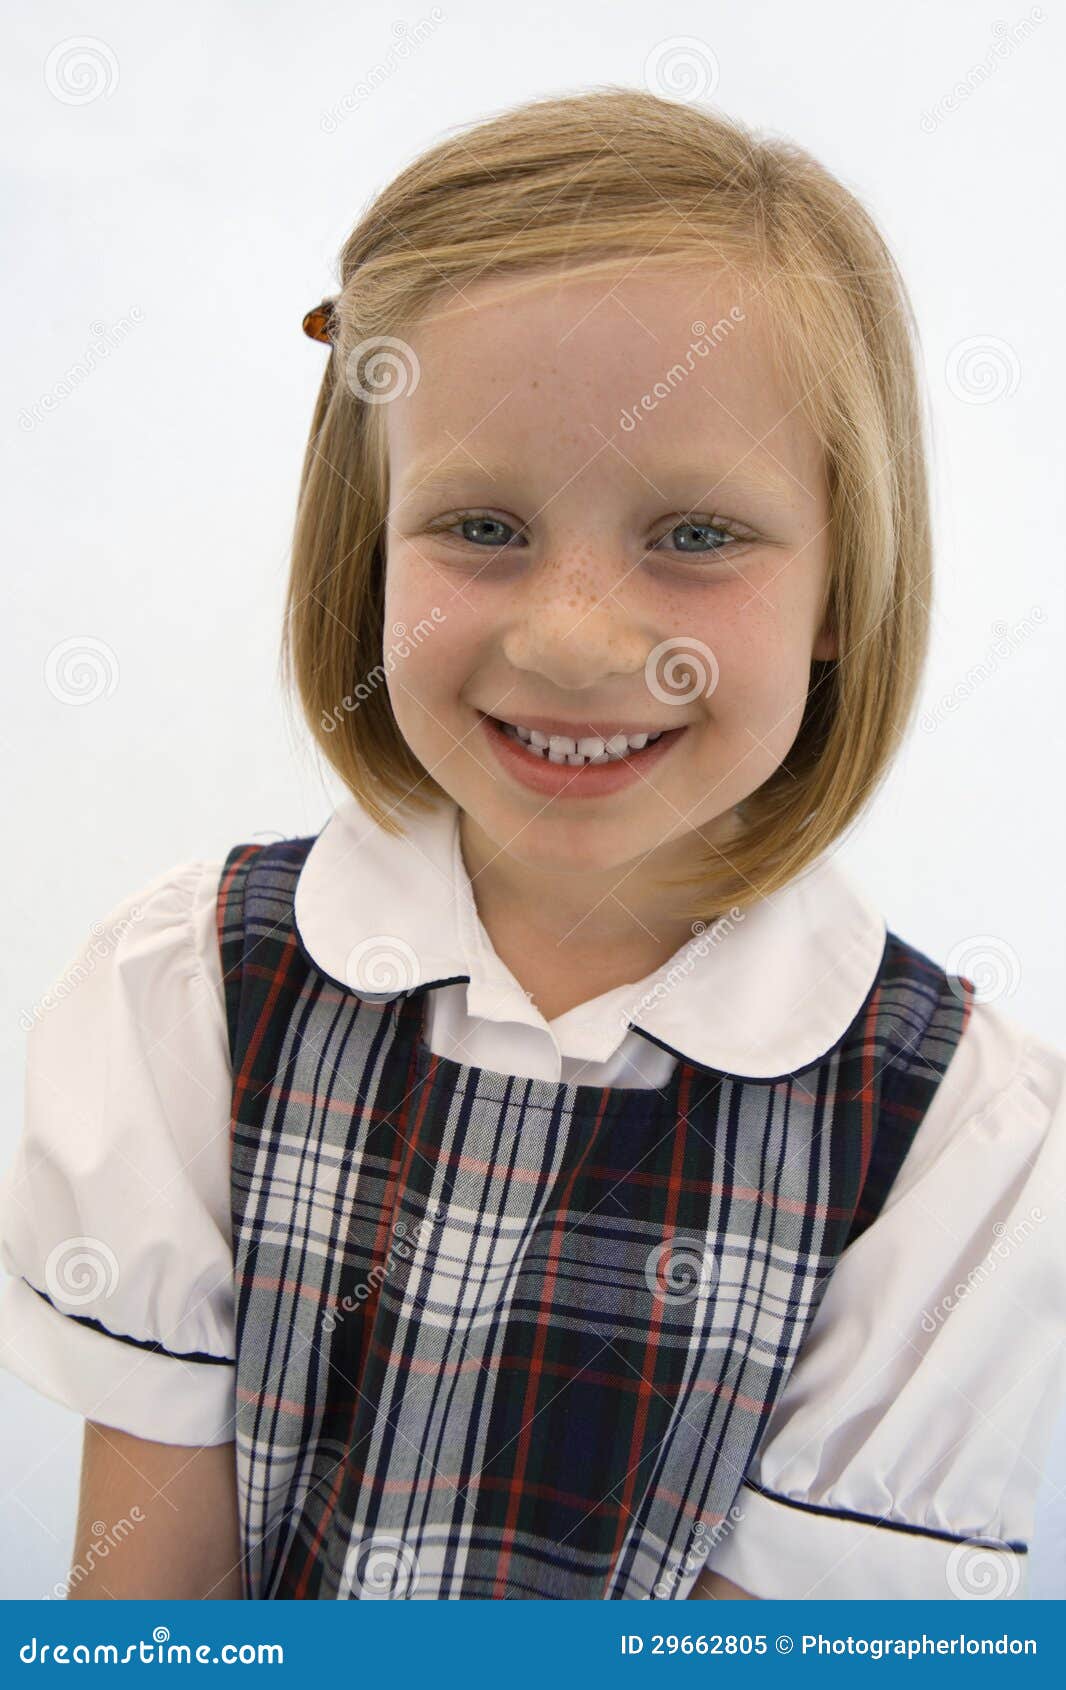 Cute Schoolgirl Smiling Stock Image Image Of Portrait 29662805 